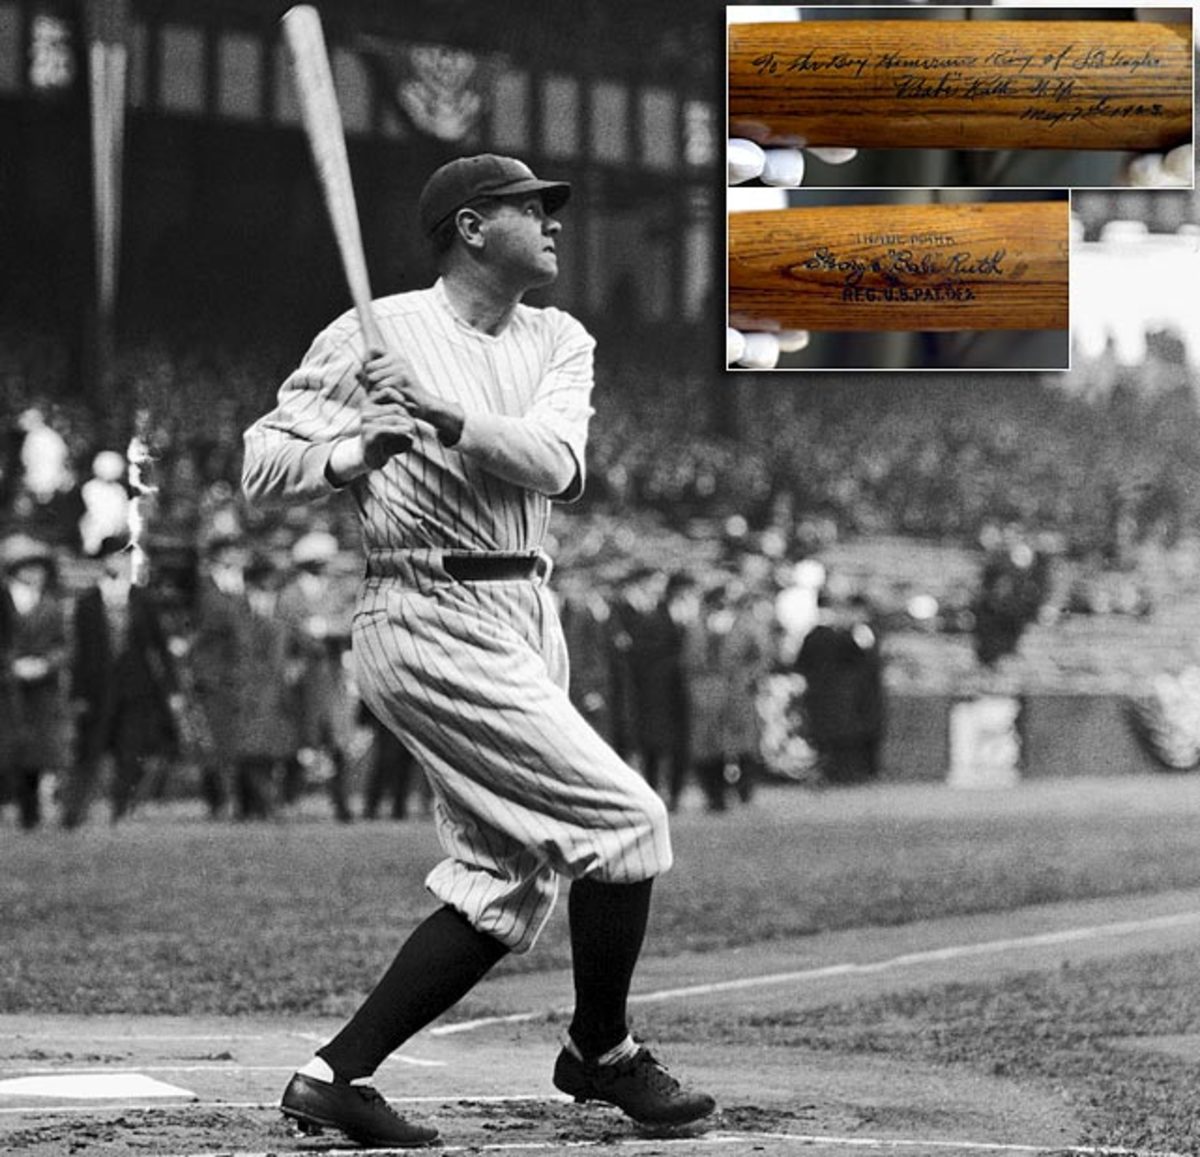 Babe Ruth Bat from First Home Run at Yankee Stadium (1923)